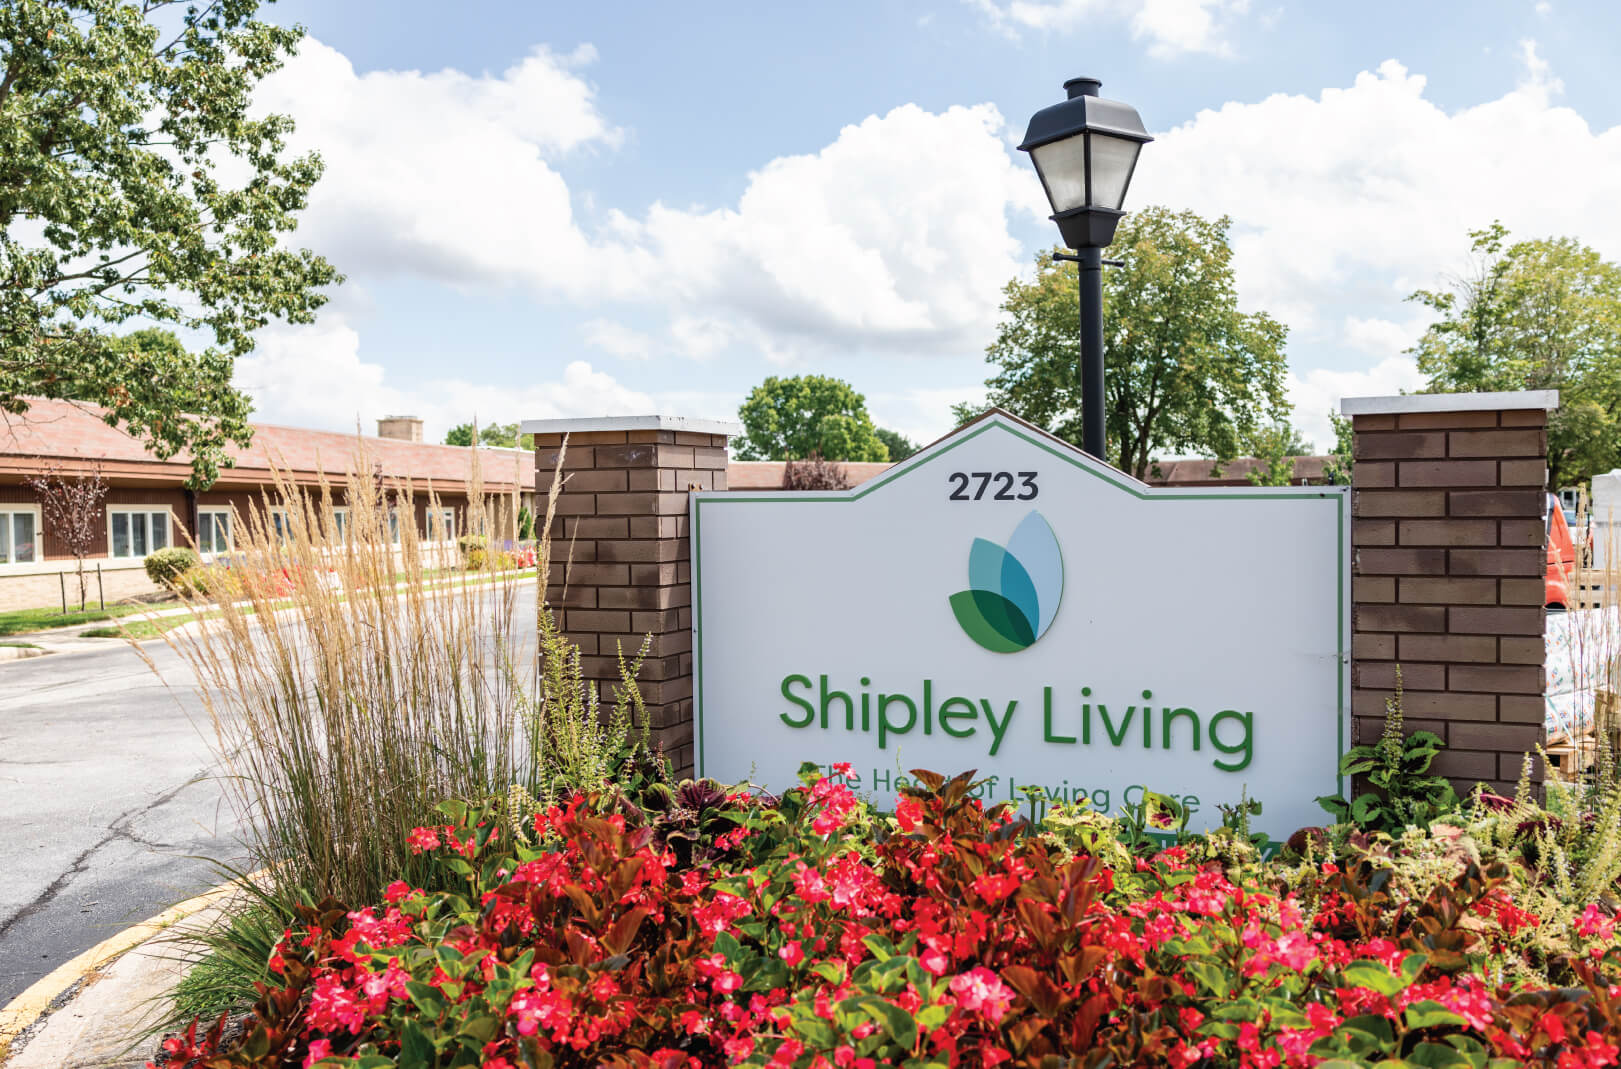 Shipley Living front entrance sign